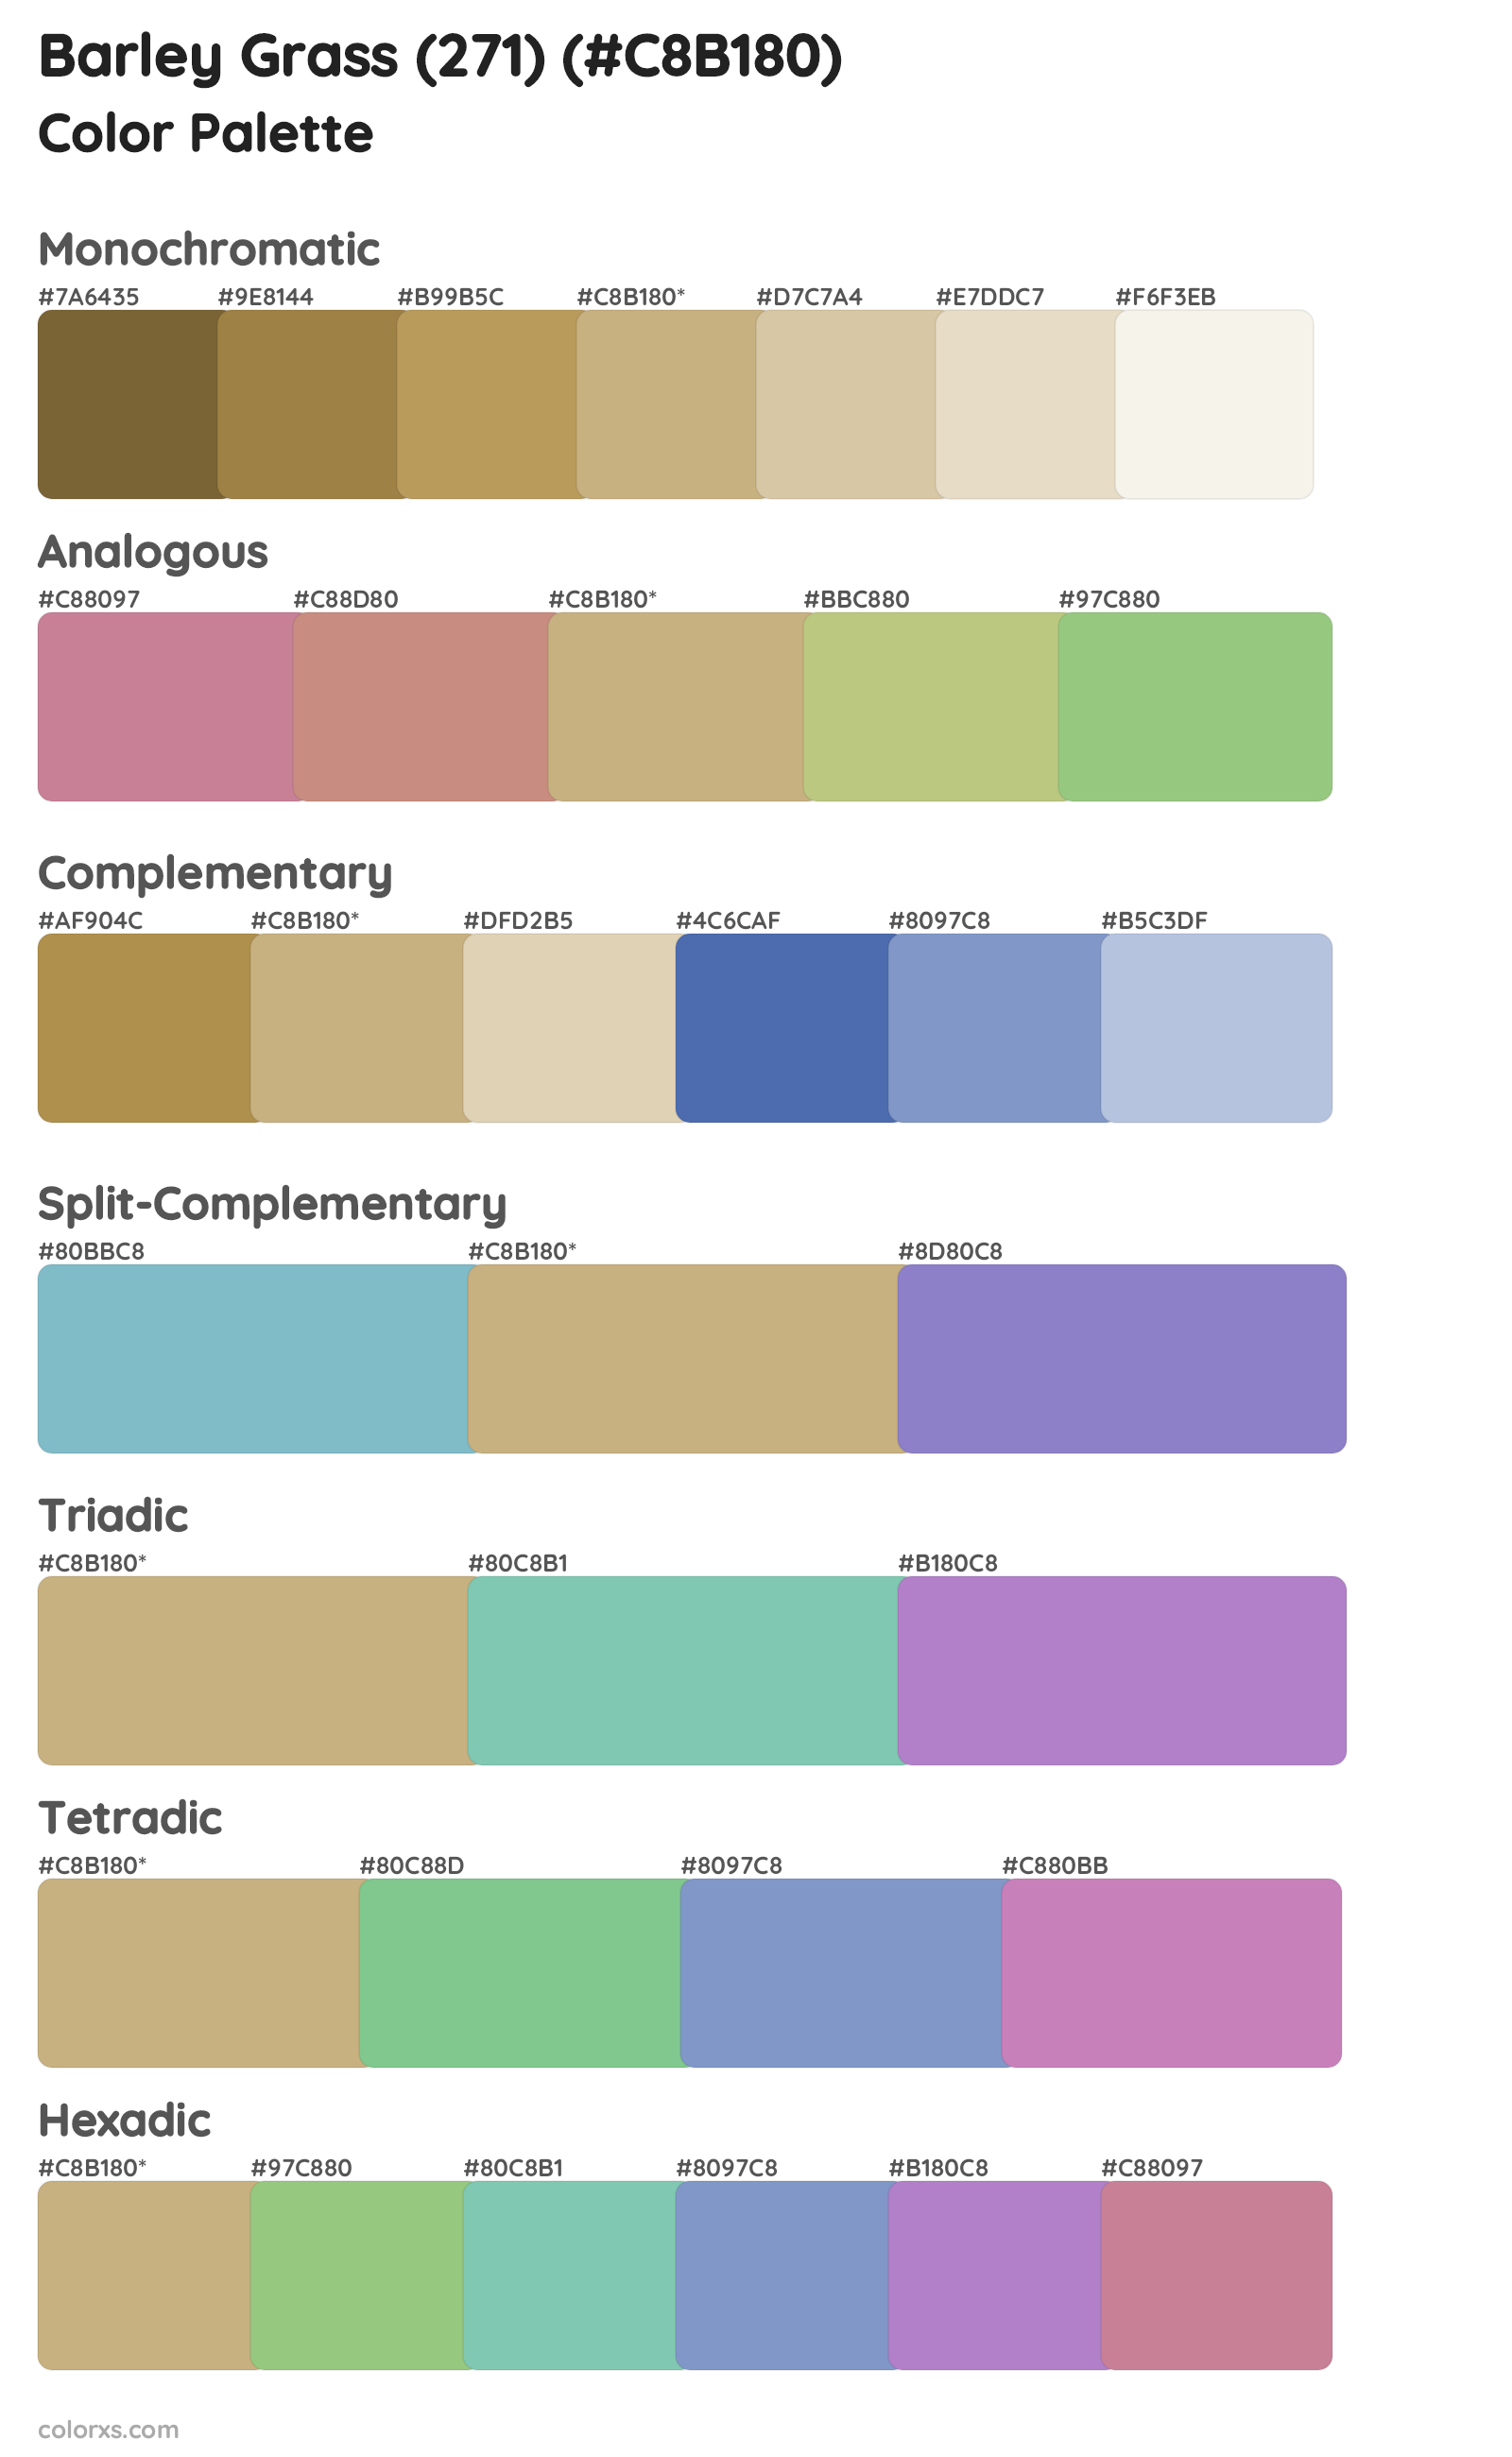 Barley Grass (271) Color Scheme Palettes